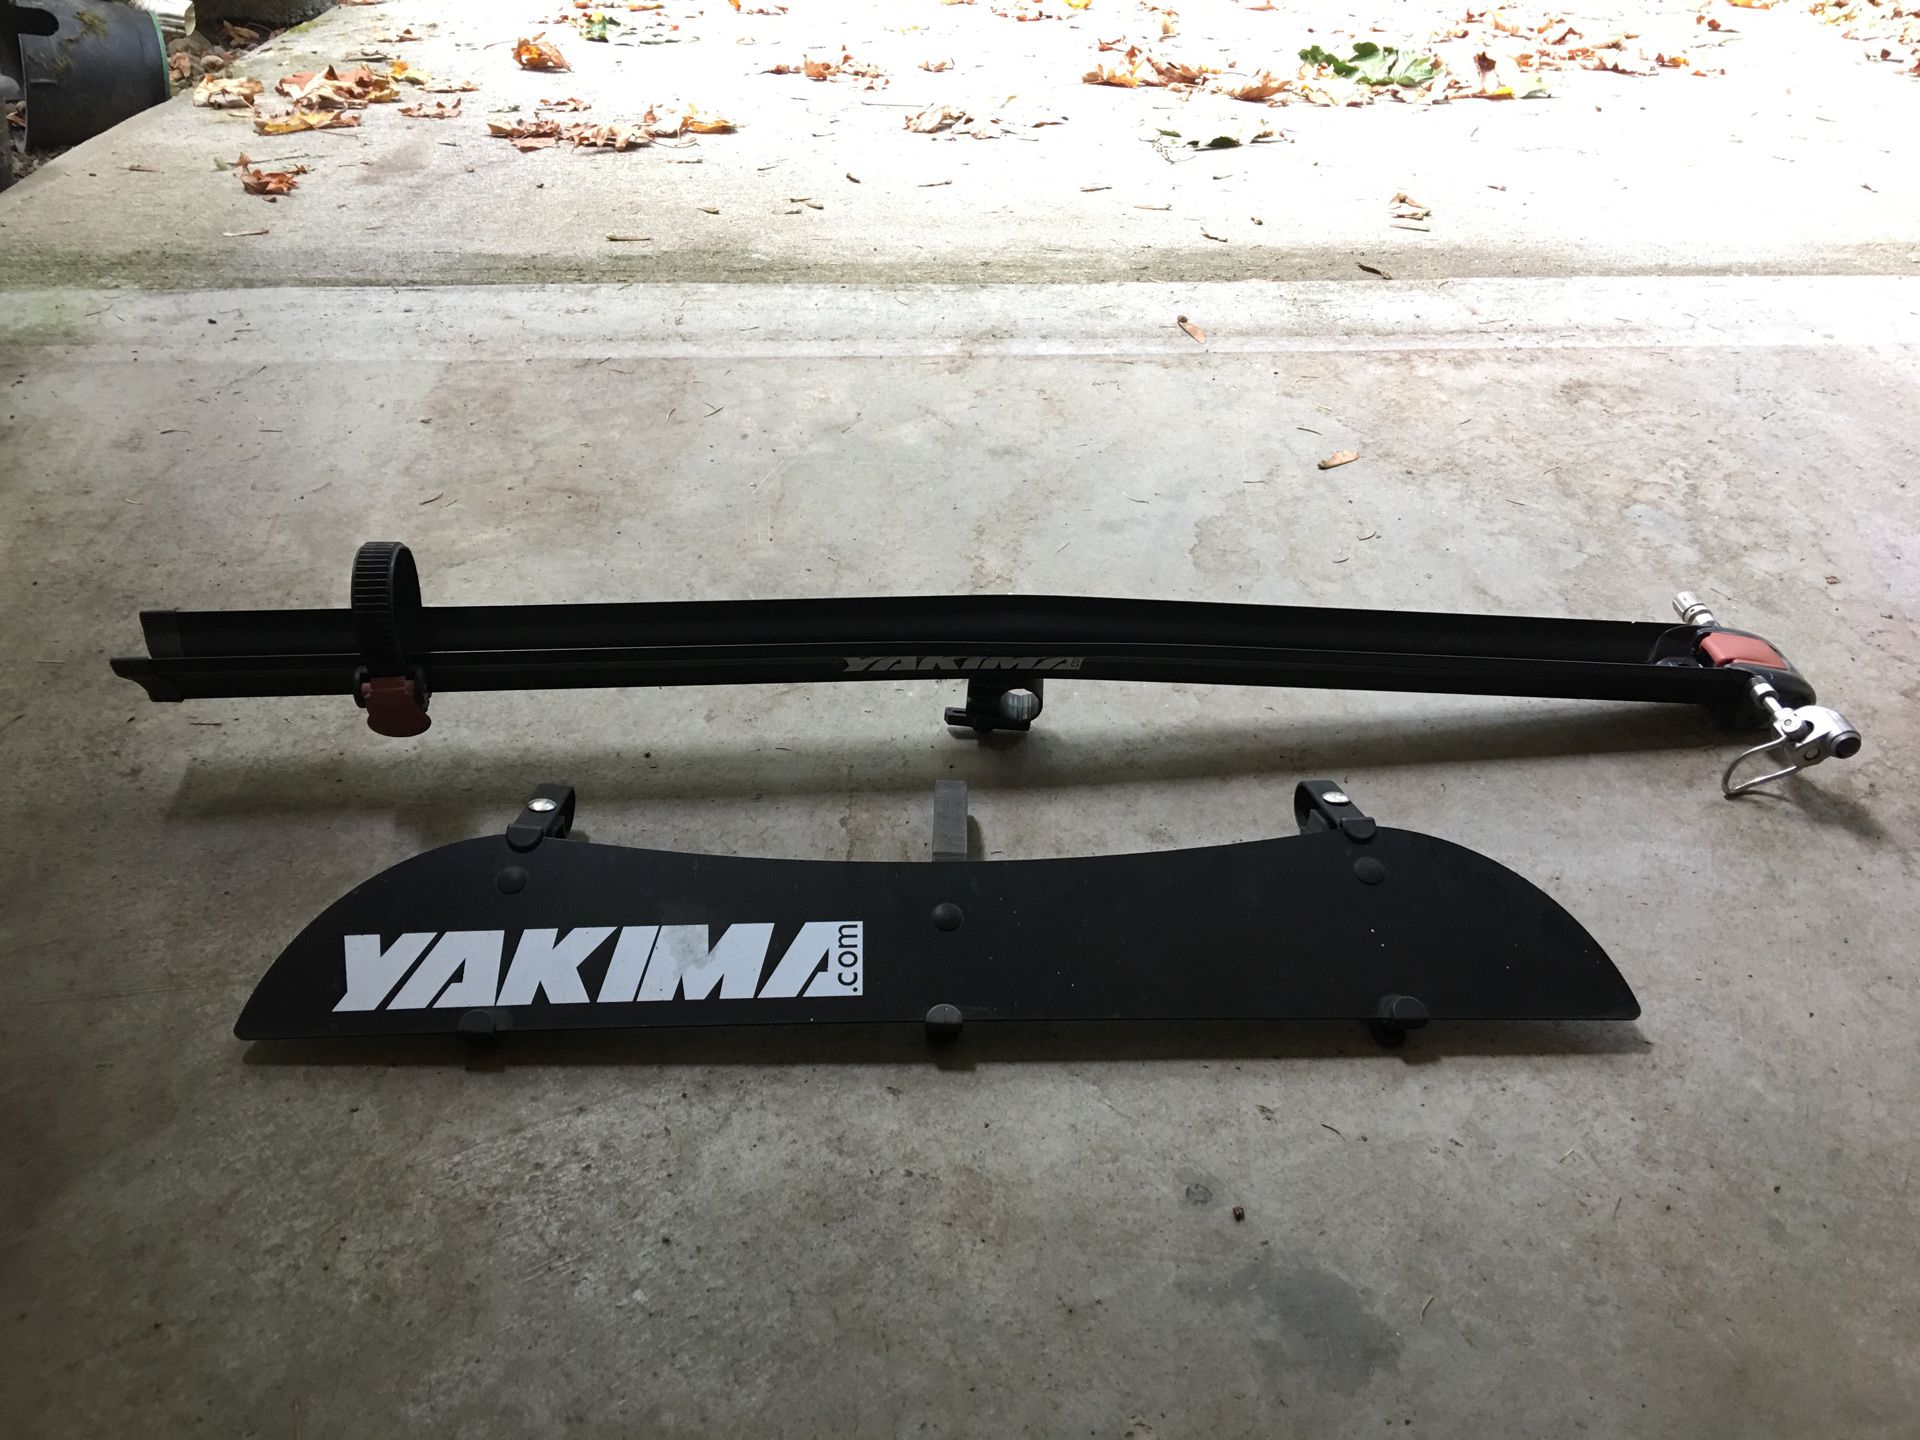 Yakima bike rack and fairing